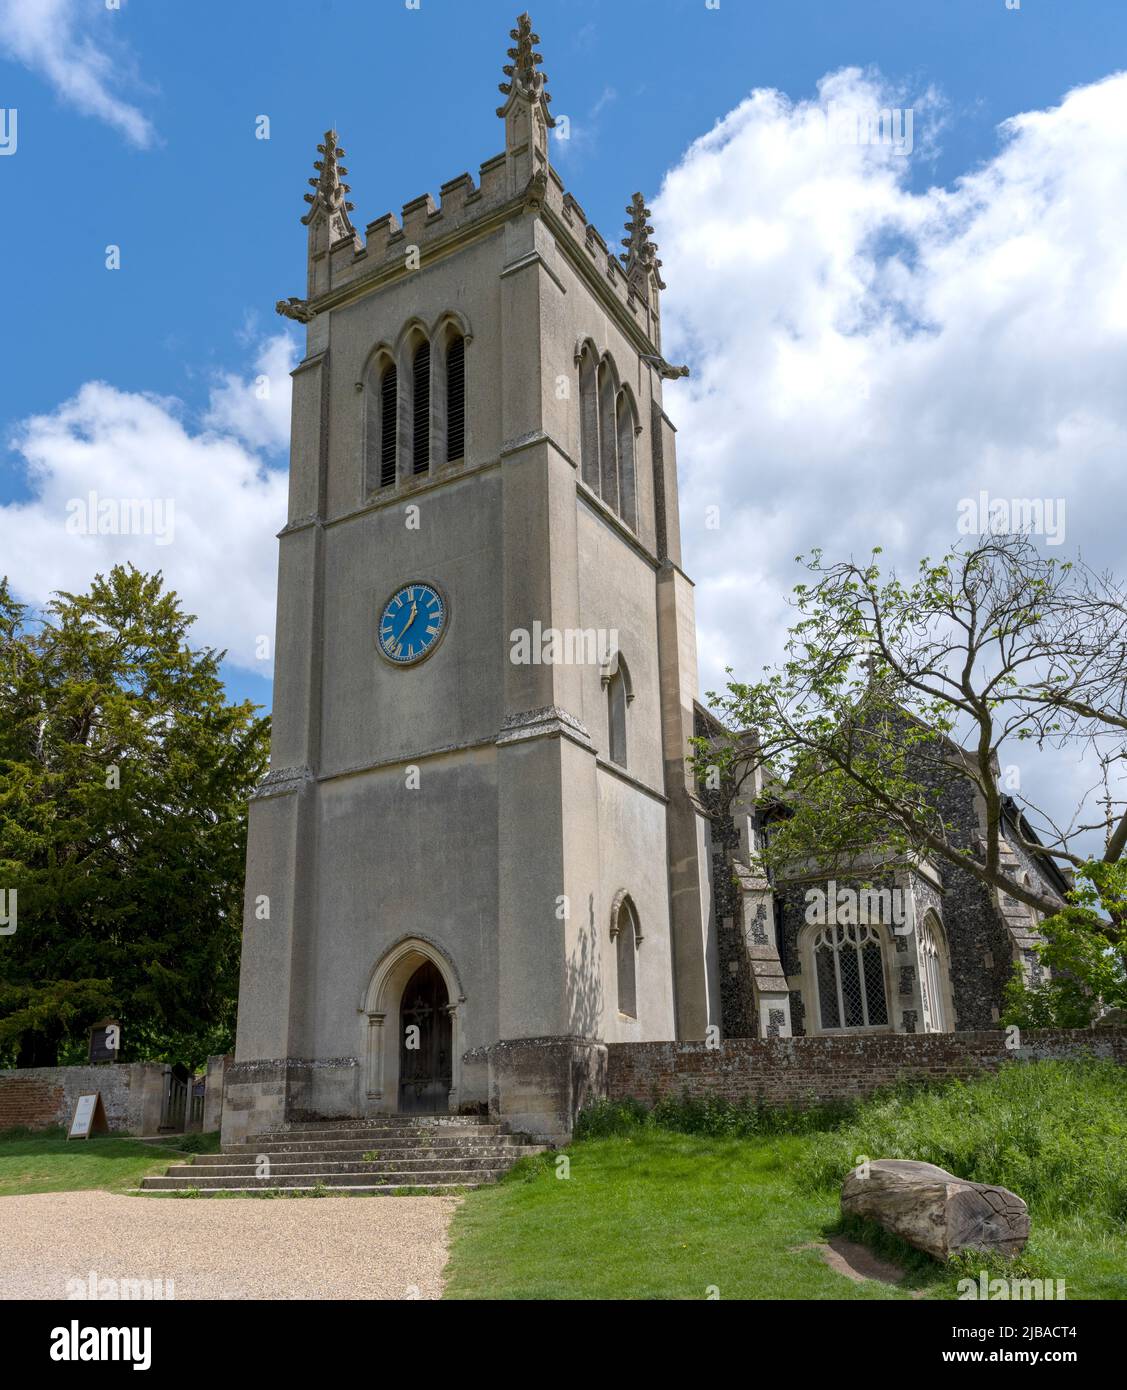 St Mary's Church - Ickworth Church - former parish church in Ickworth Park, near Bury St Edmunds, Suffolk, England, UK. Stock Photo